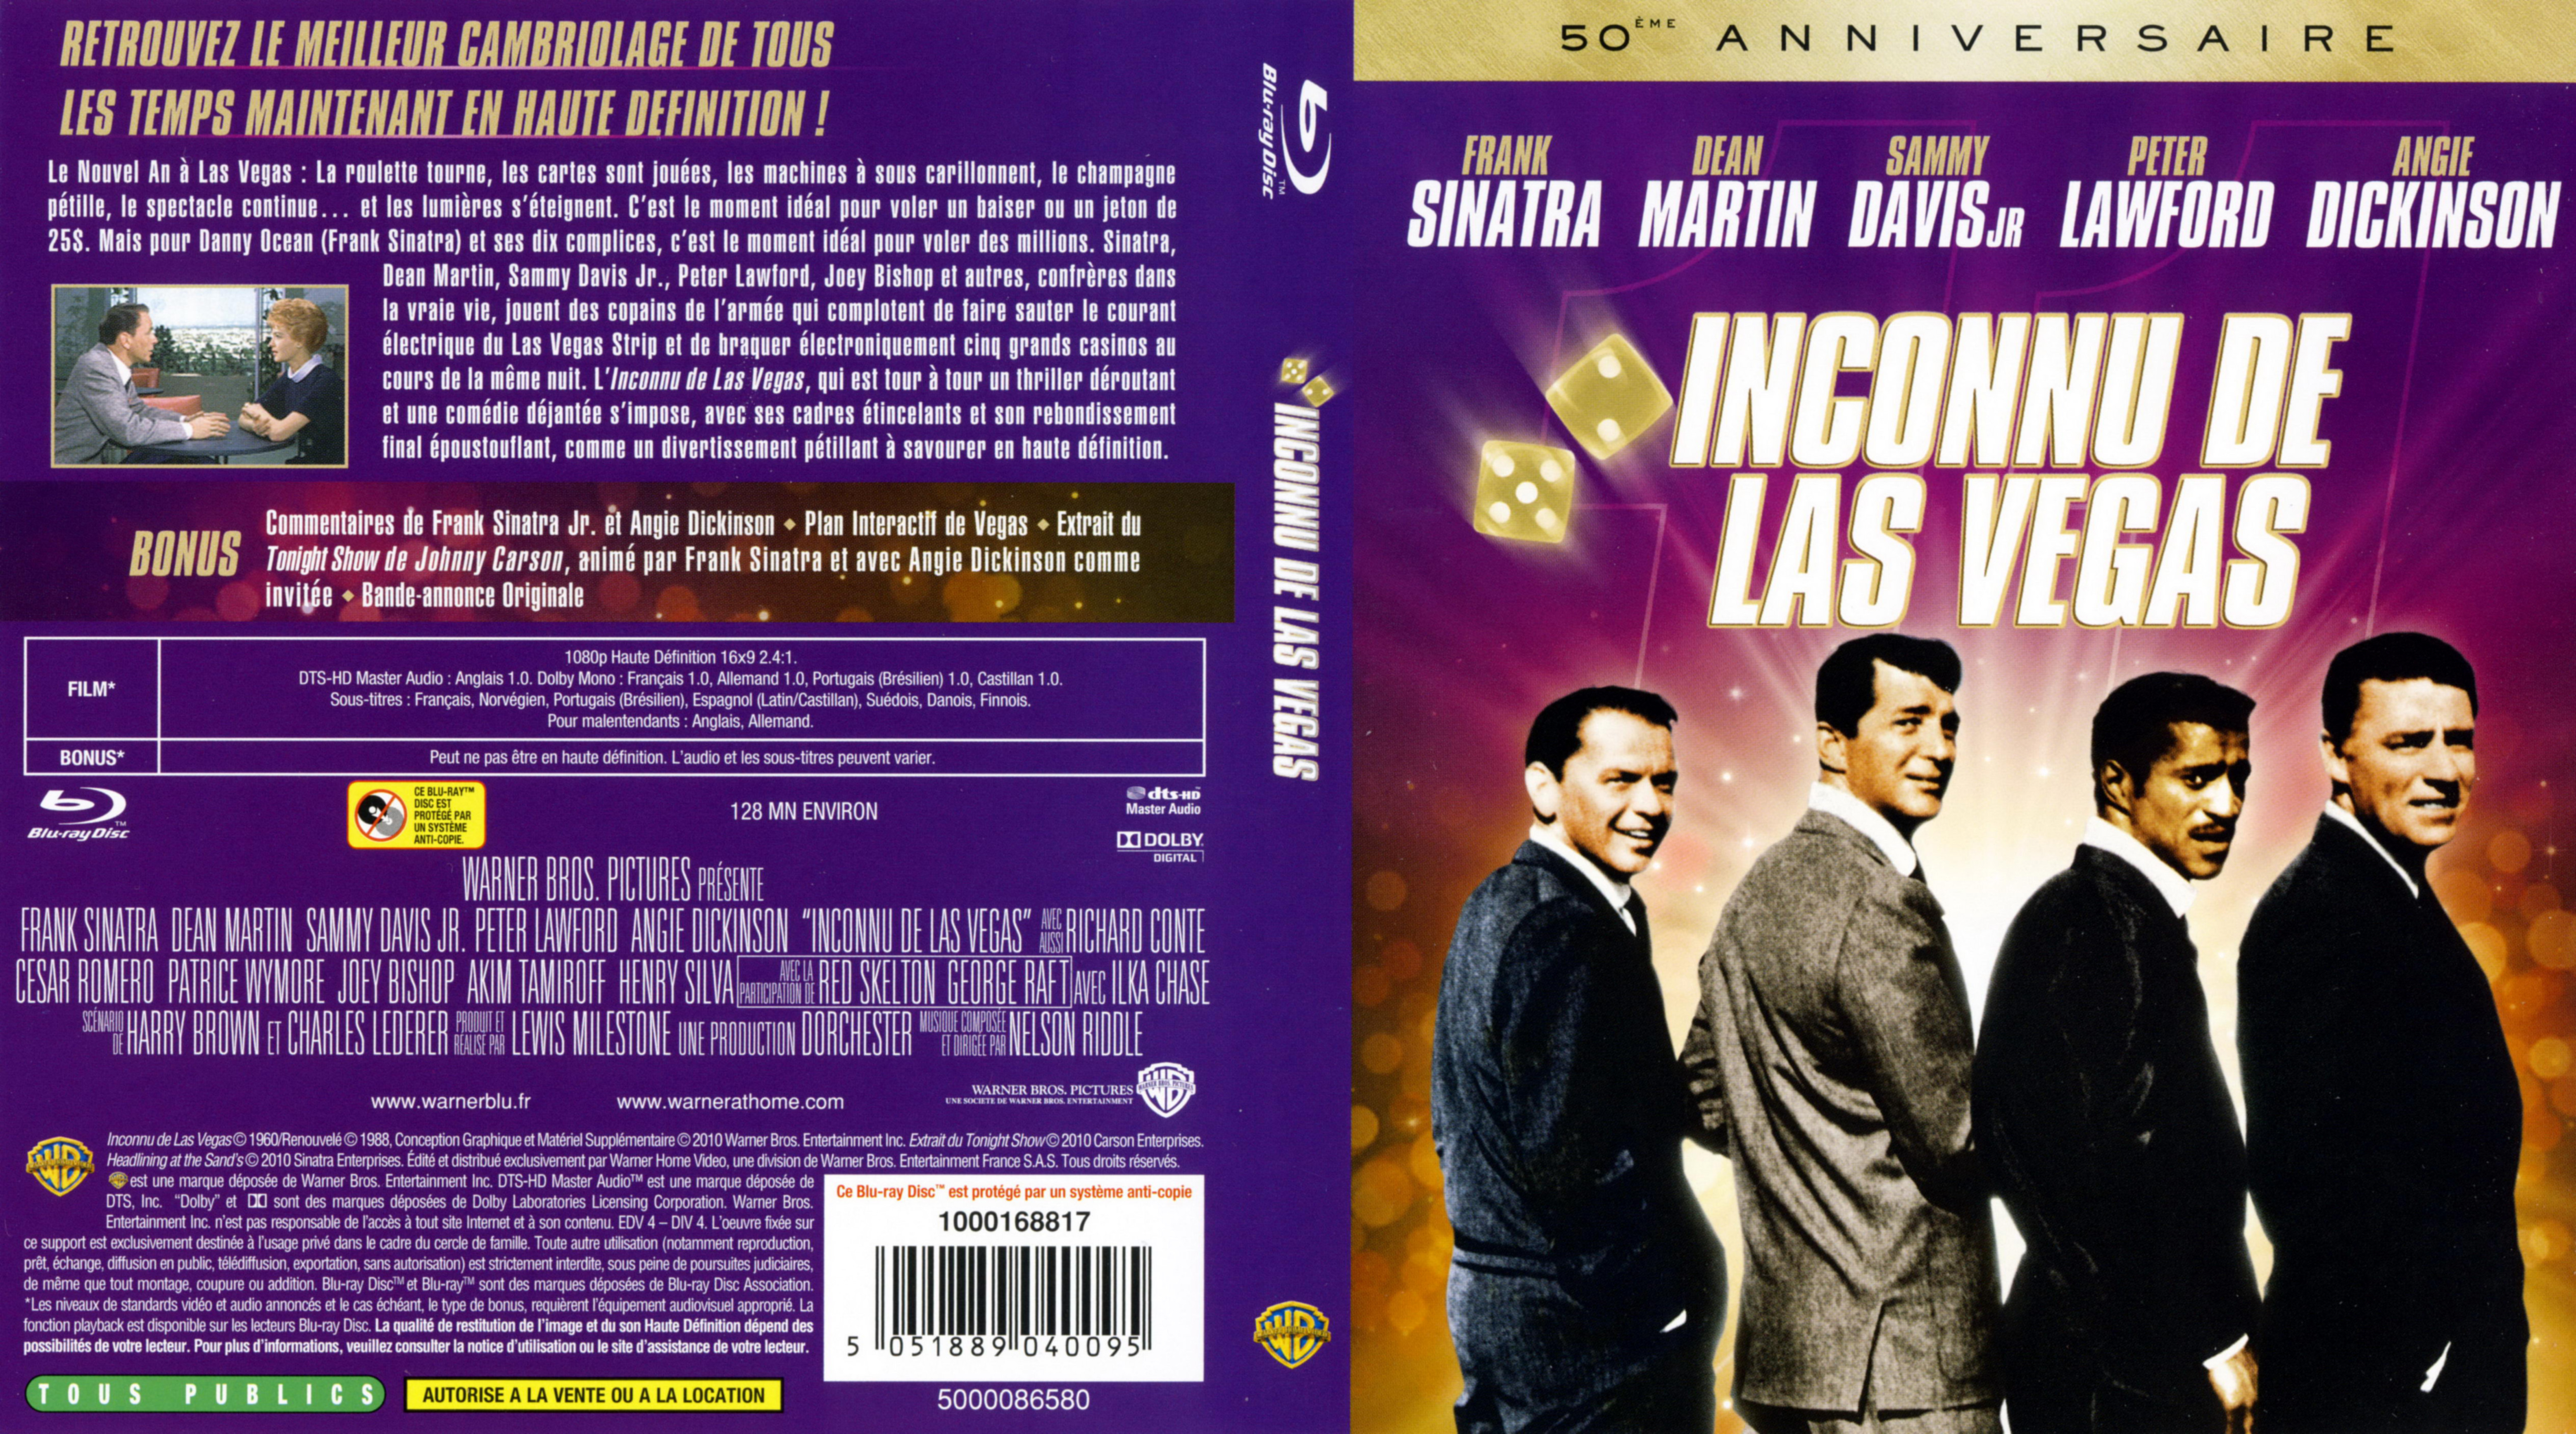 Jaquette DVD Inconnu de Las Vegas (BLU-RAY)